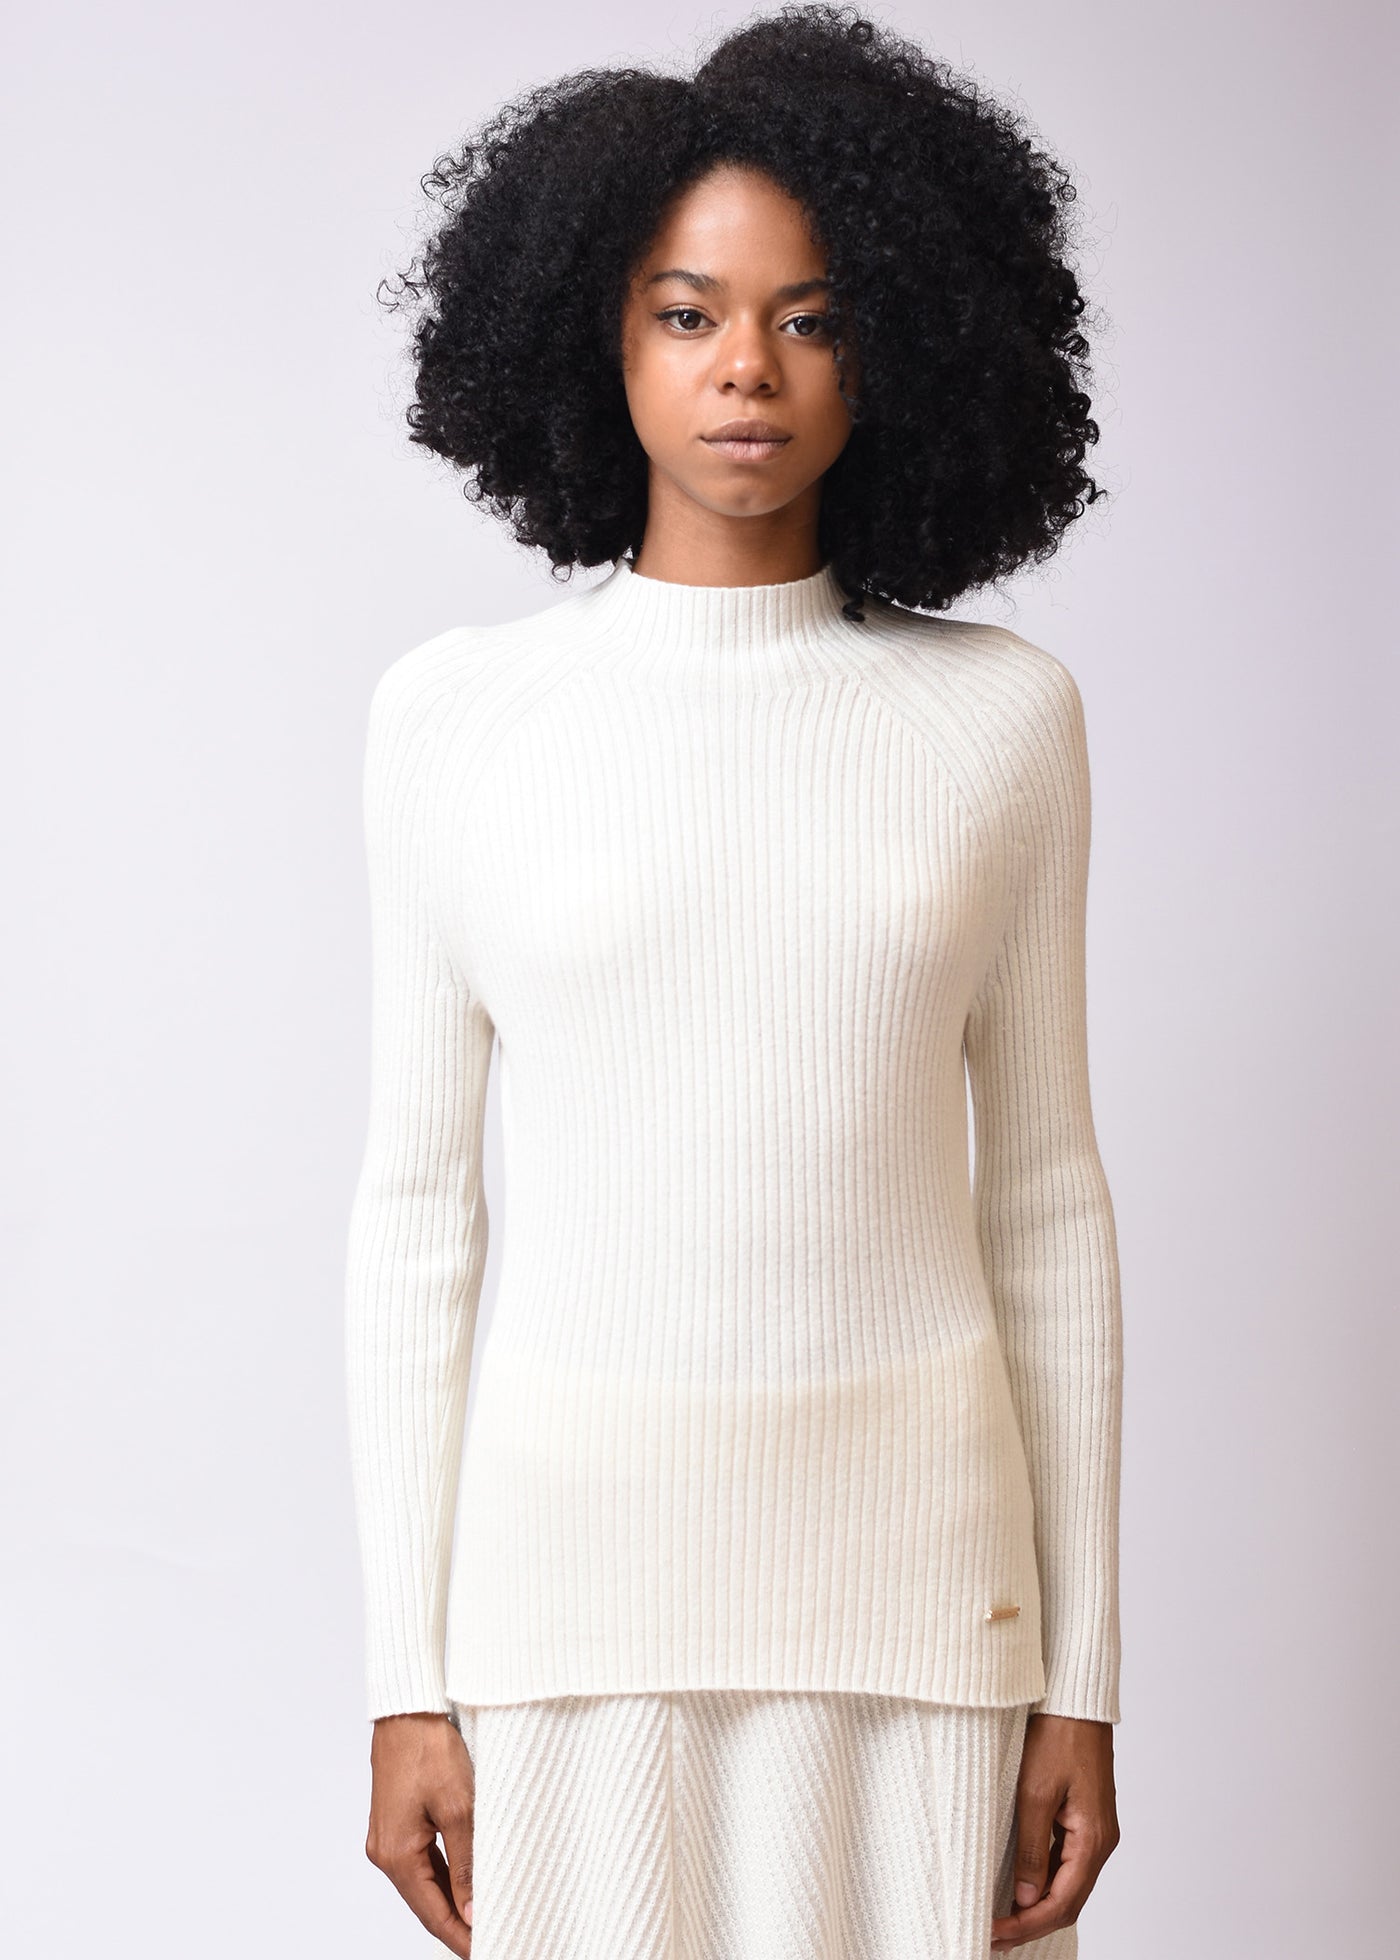 Women's Rib Knit Cashmere Pullover